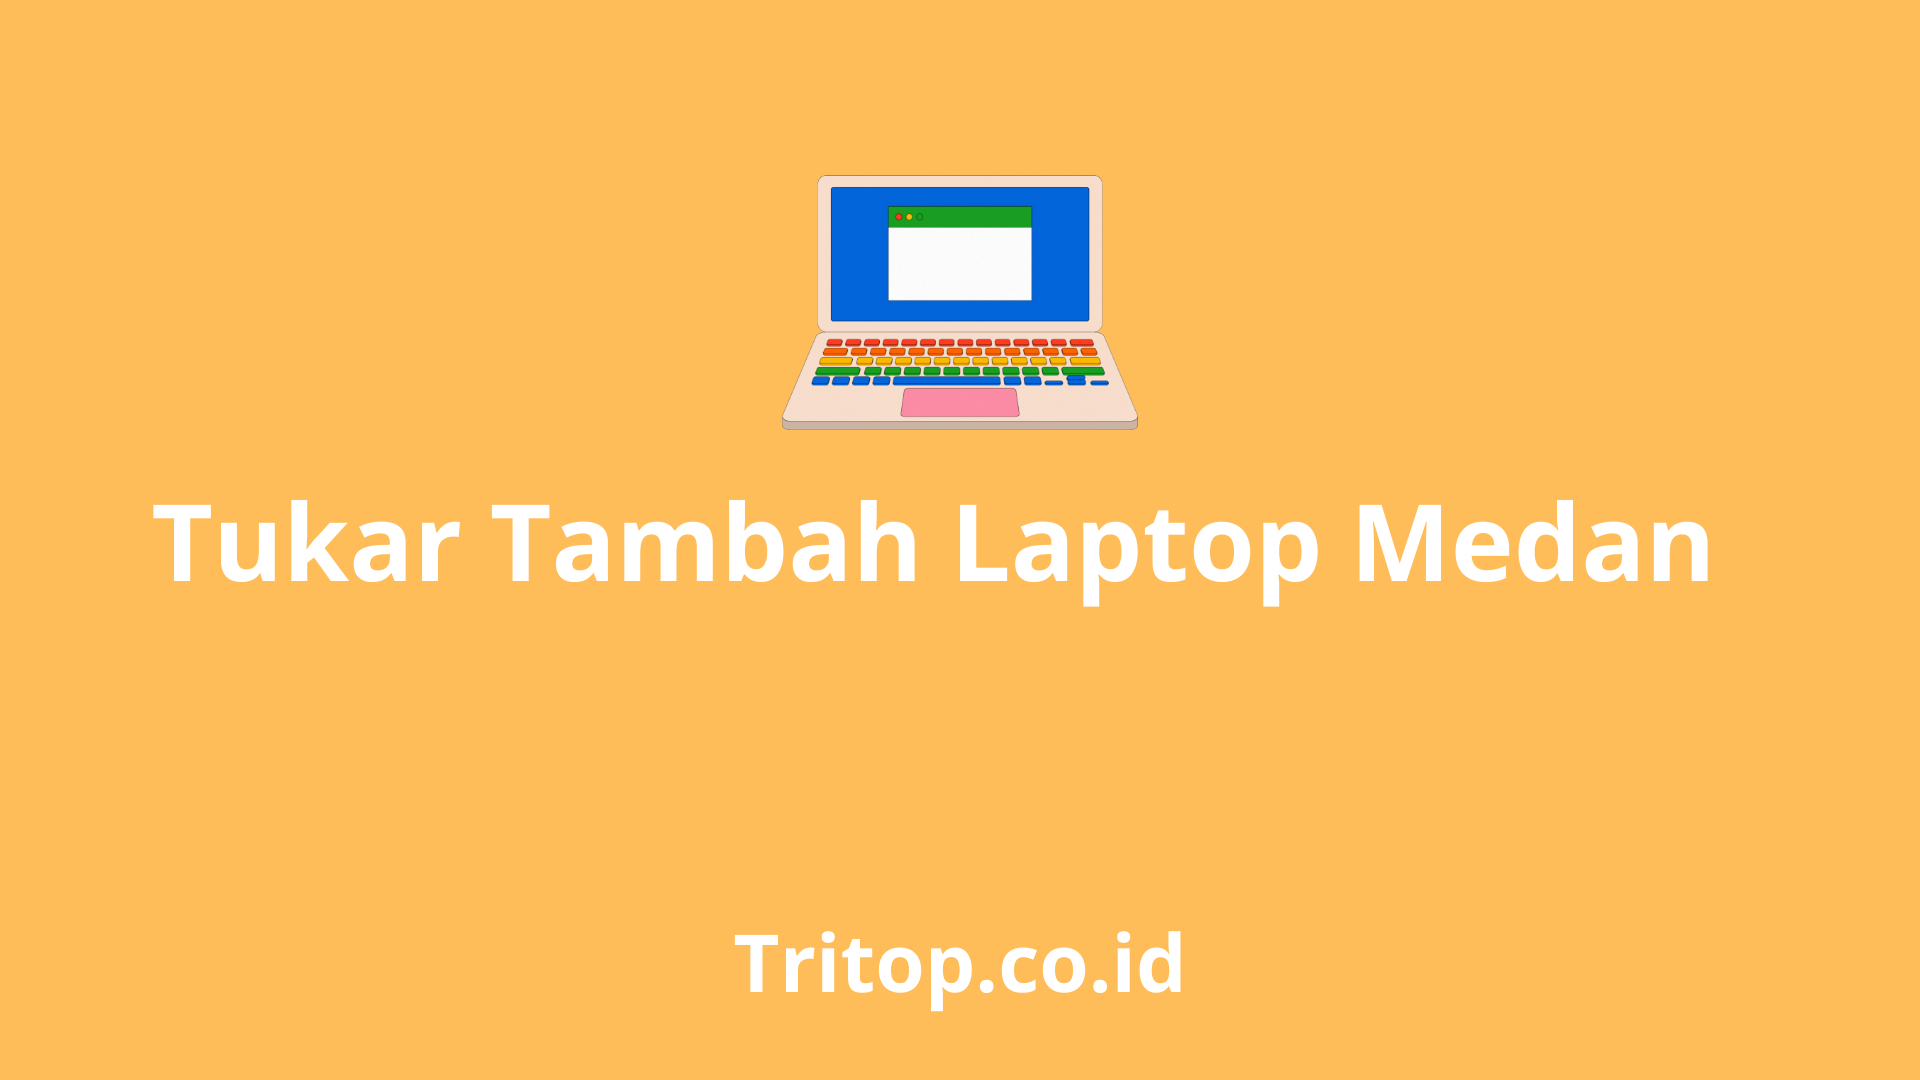 Tukar Tambah Laptop Medan tritop.co.id